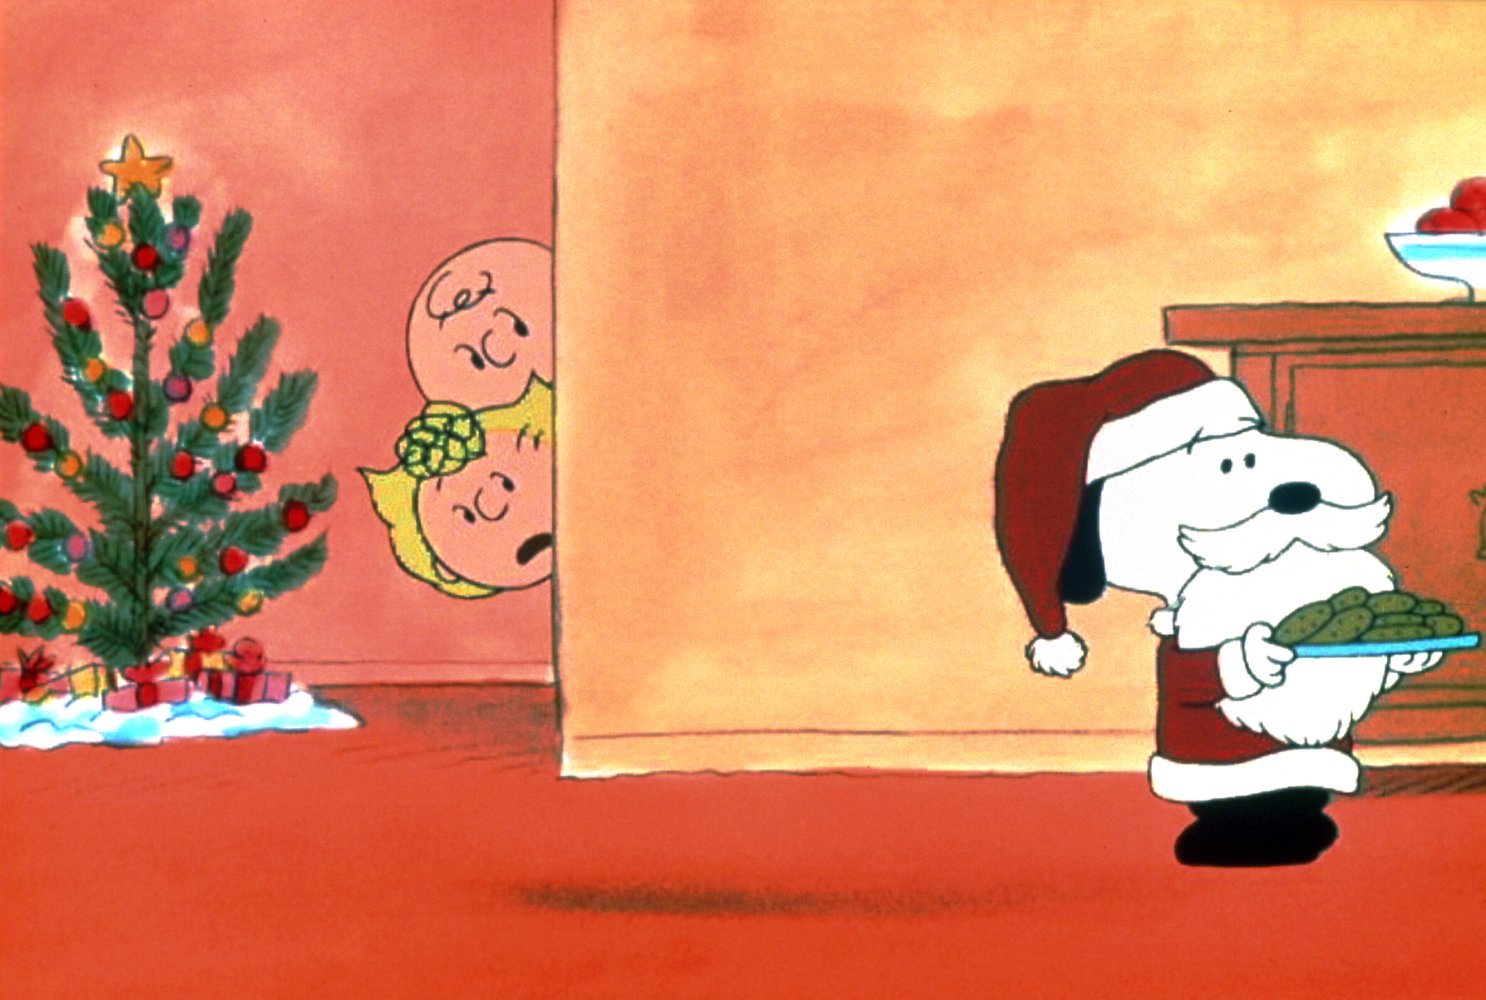 Charlie+Brown's-Christmas+Tales-movie+Review-Deborah+Reed-DebaDoTell